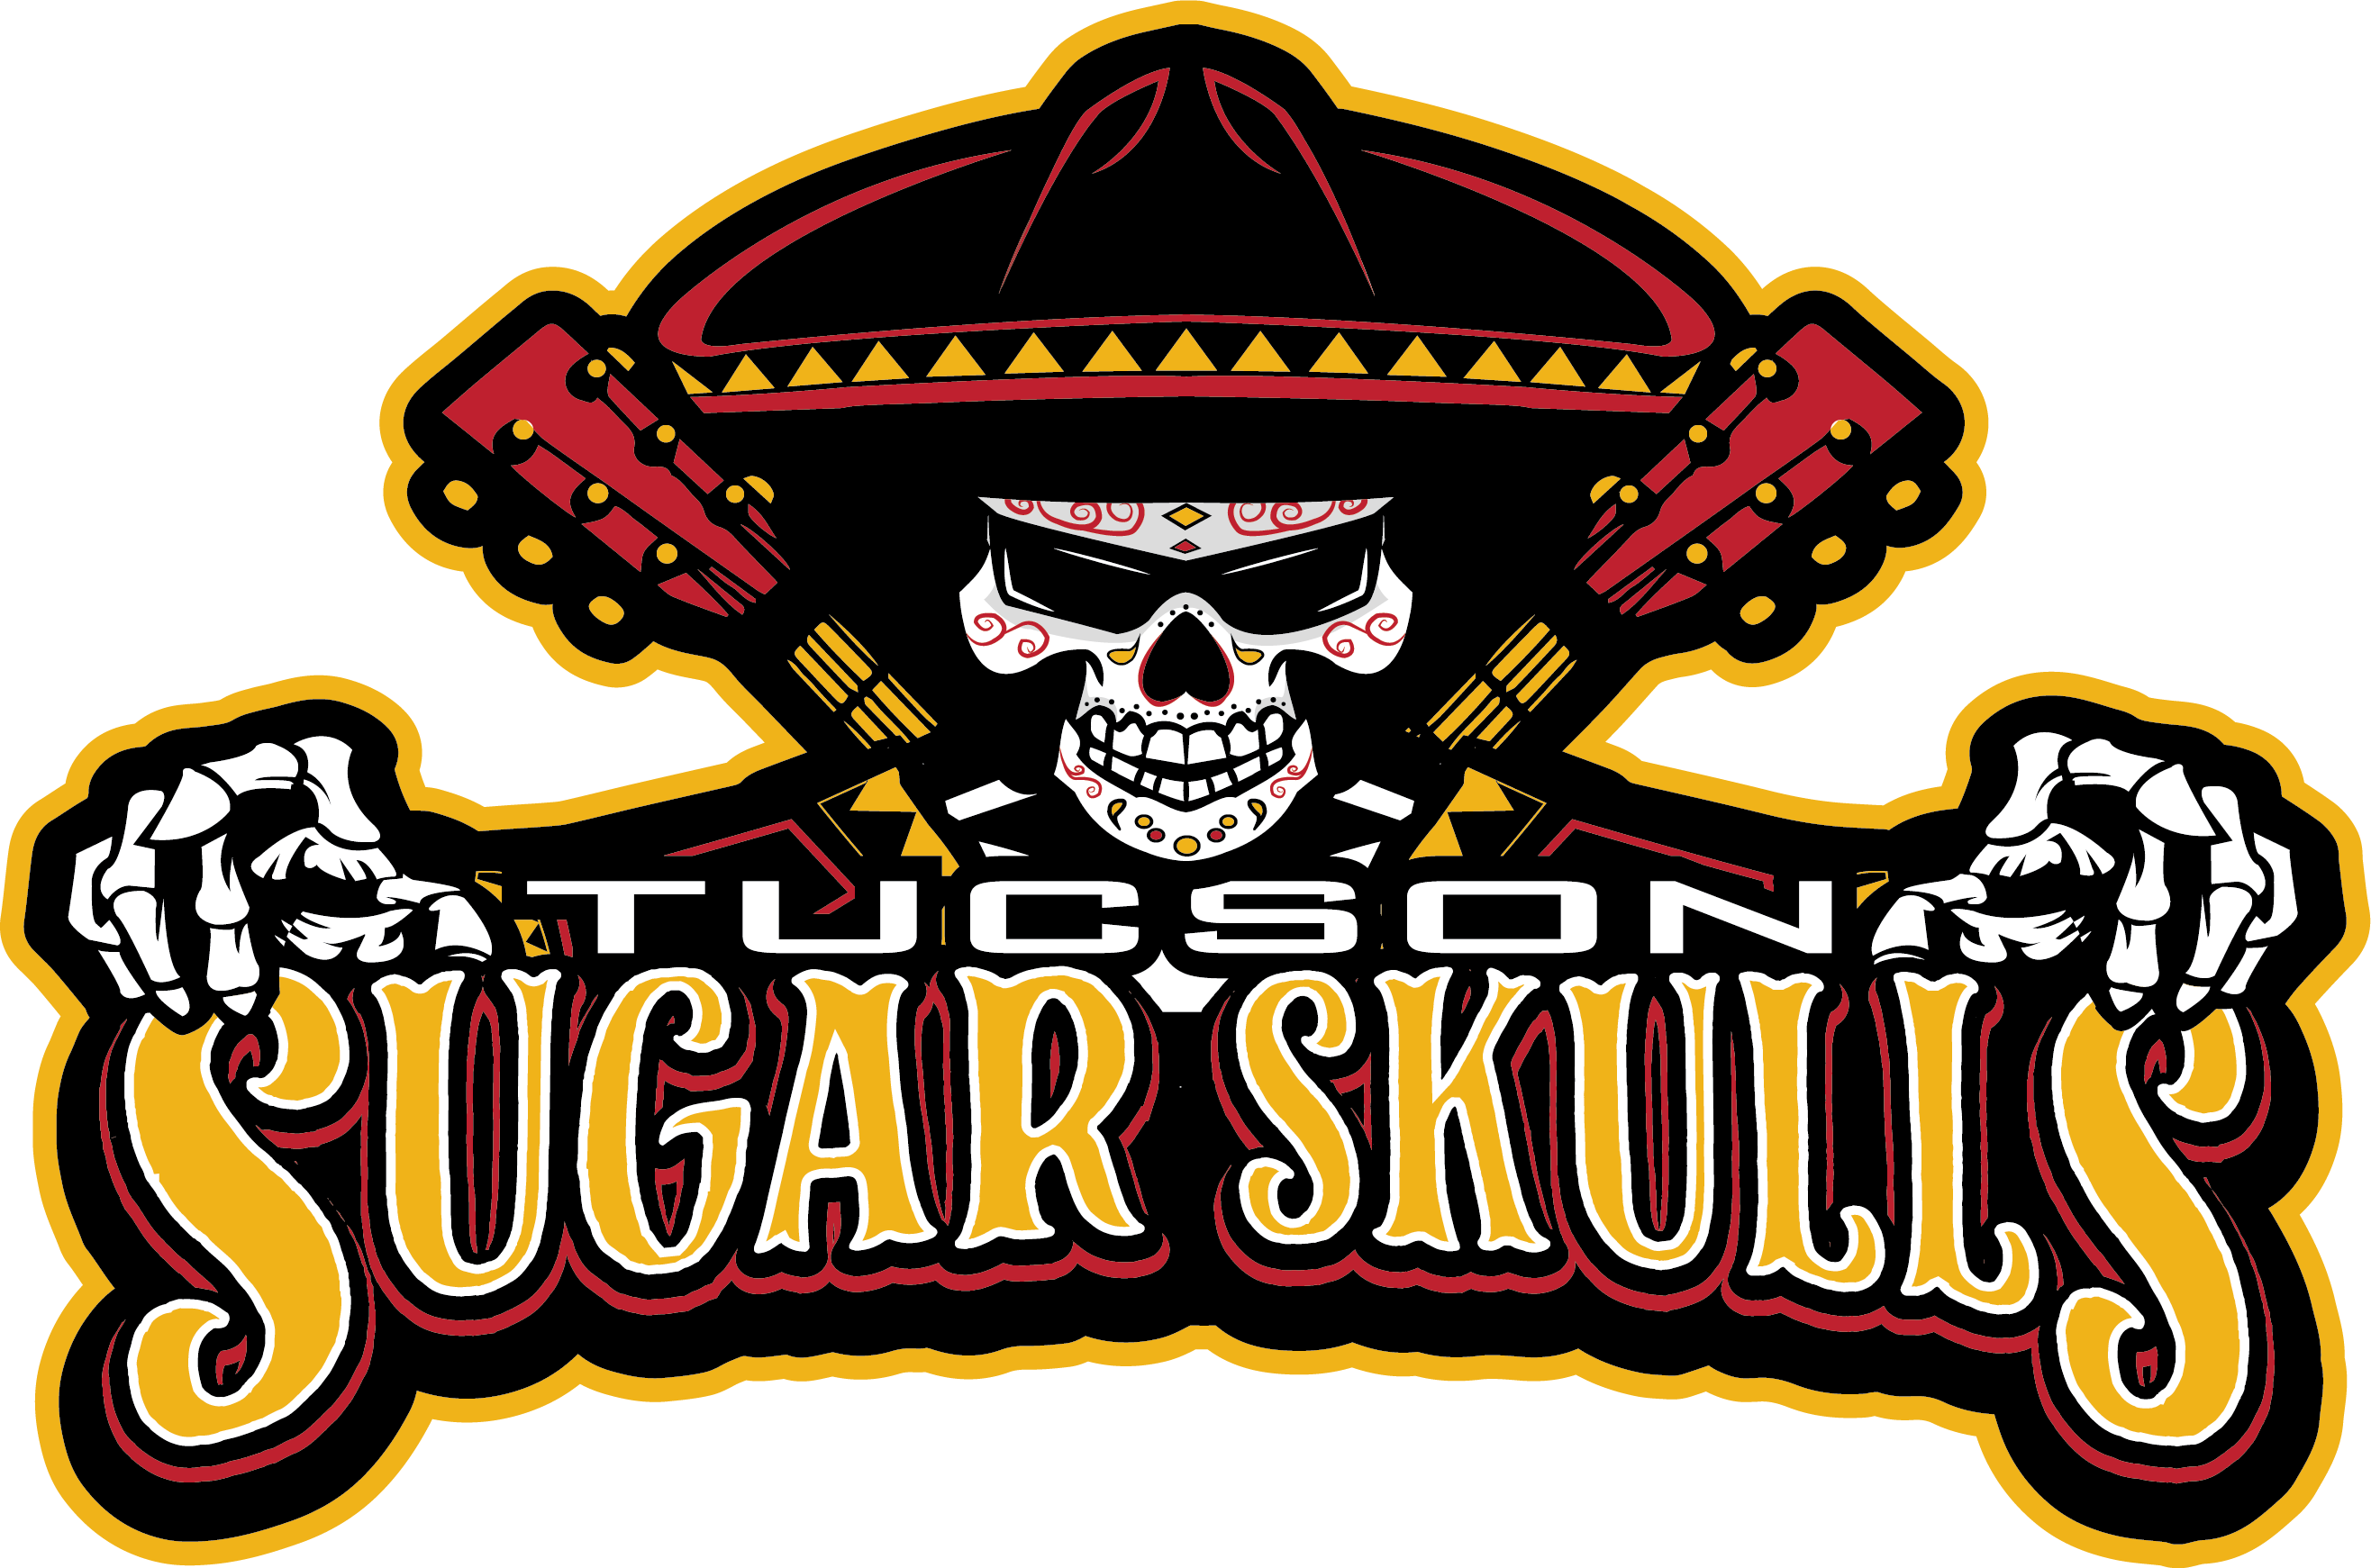   
																Tucson Sugar Skulls Square off against Familiar Foe in Northern Arizona Wranglers in Rematch 
															 